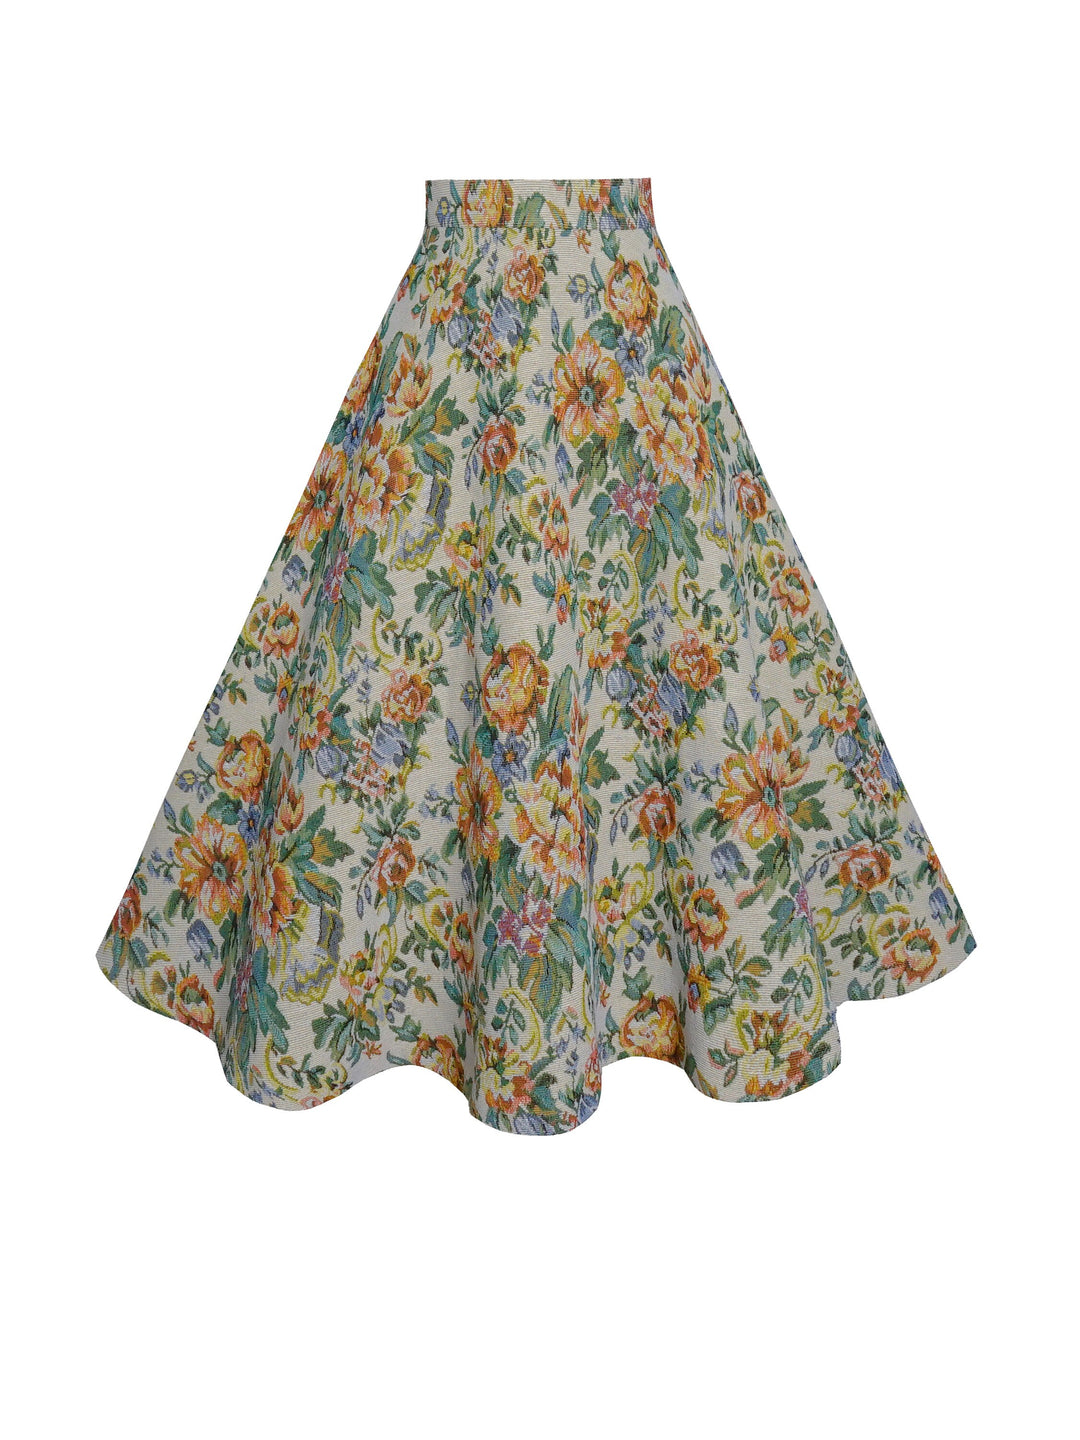 RTS - Size S - Lilian Skirt Tapestry "Modern Romance"